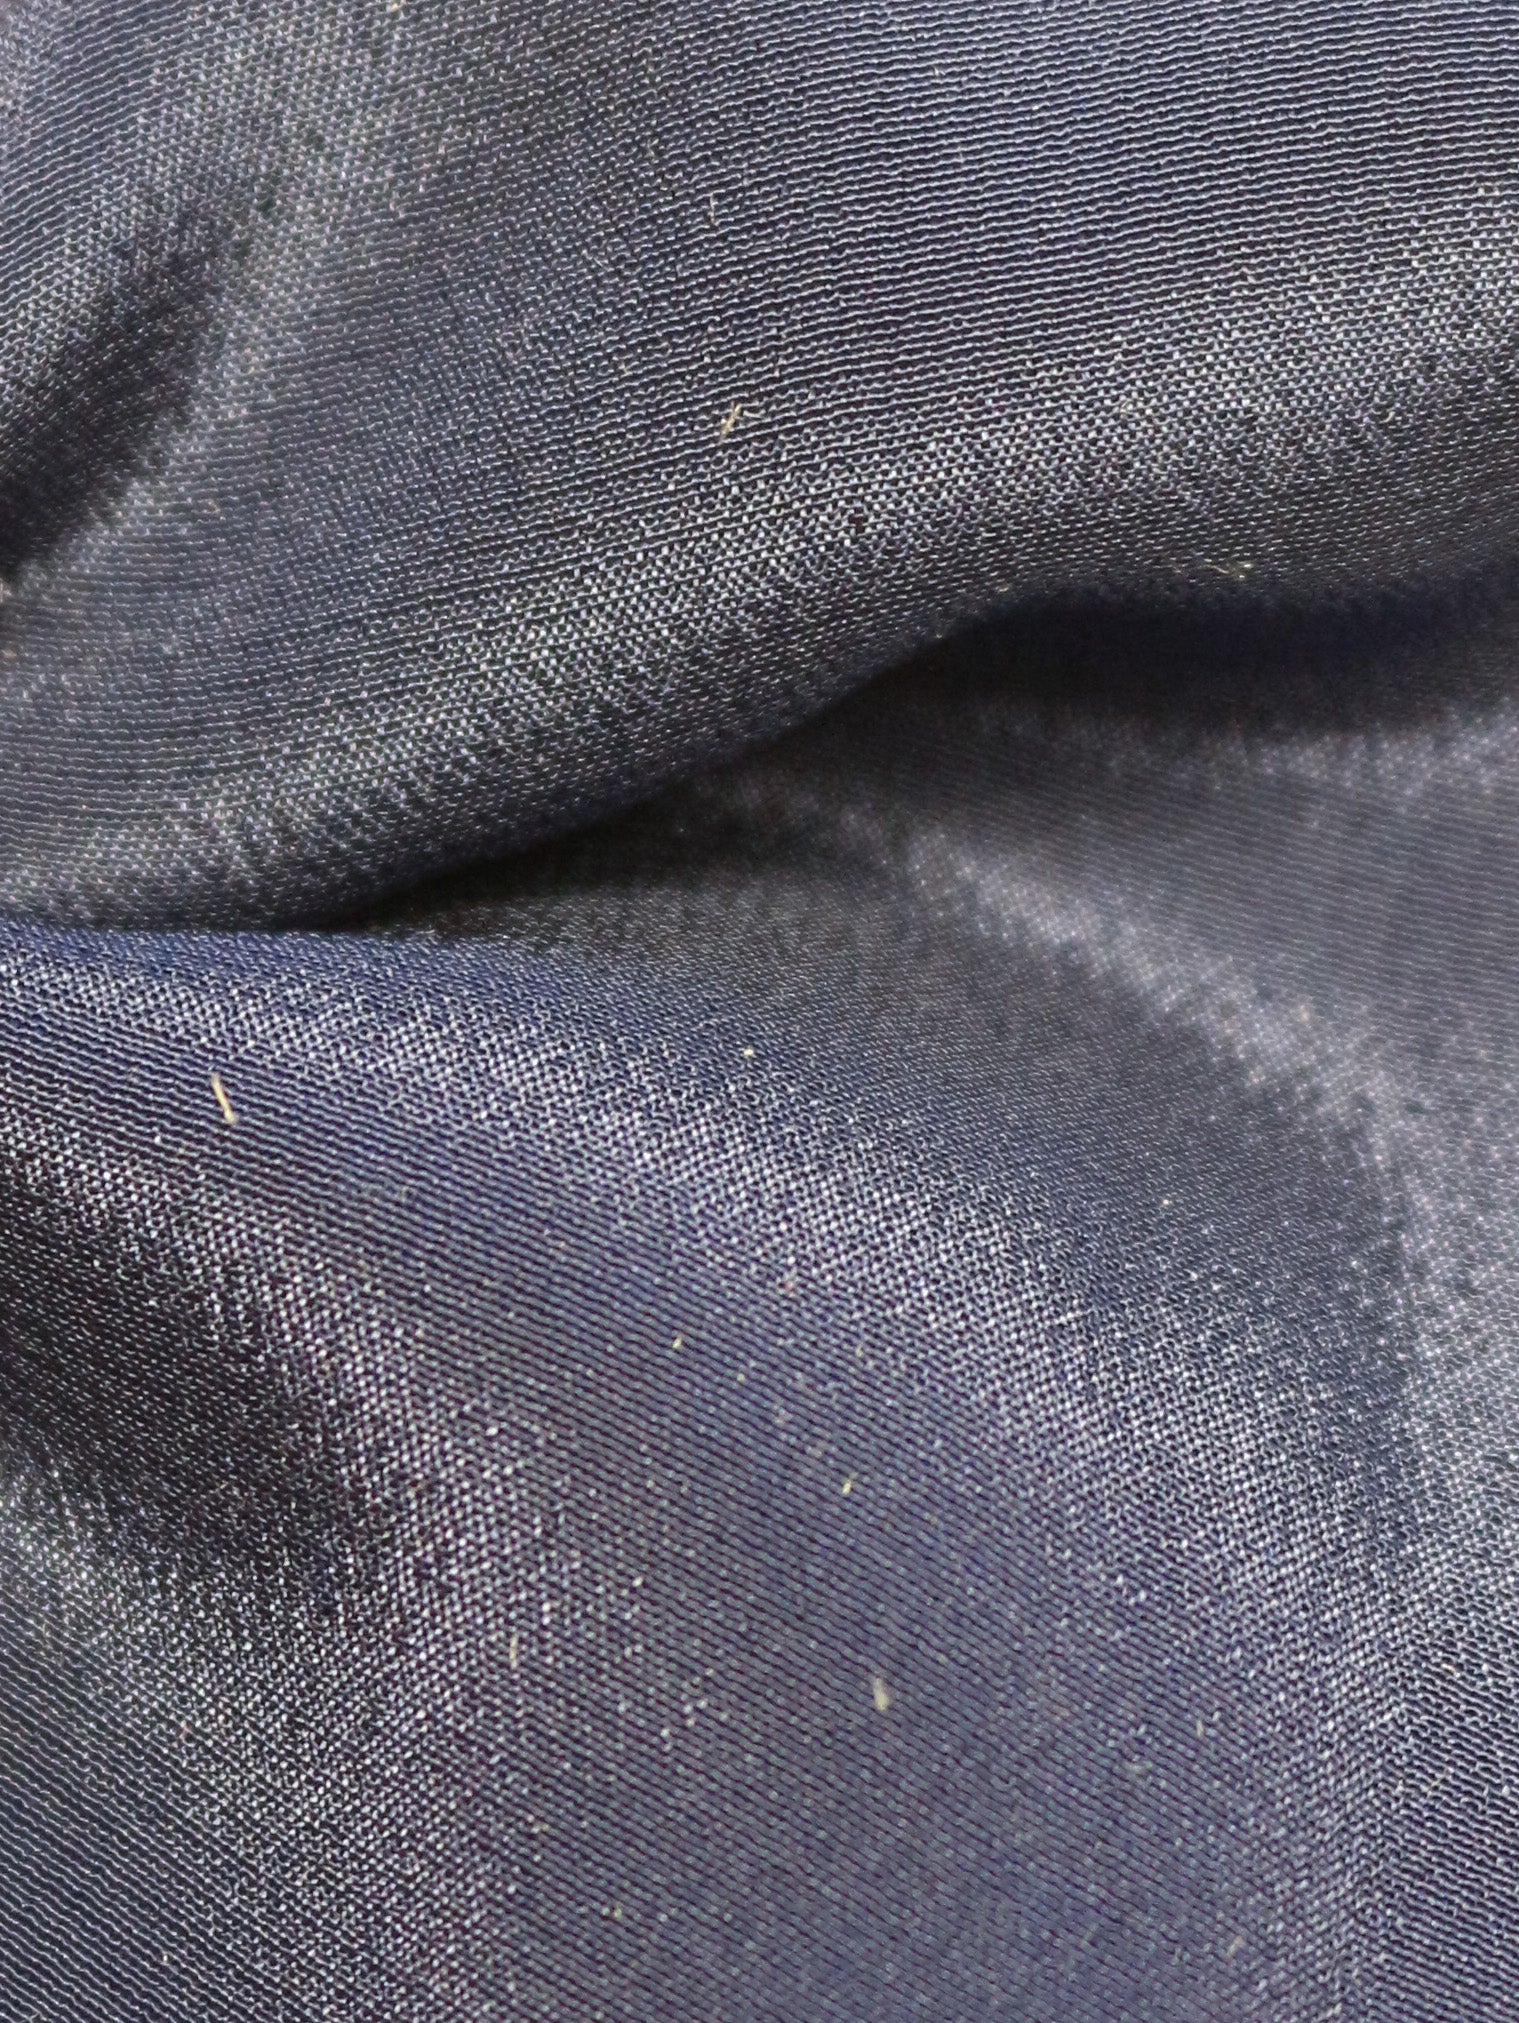 Amazon.co.jp: DIY shiny denim fabric cut cloth cloth 100% cotton fabric  sewing fabric with sequins DIY handicrafts for sewing fabric sewing coat  shirt dress skirt pillow bag cap (Color: Blue 1) :